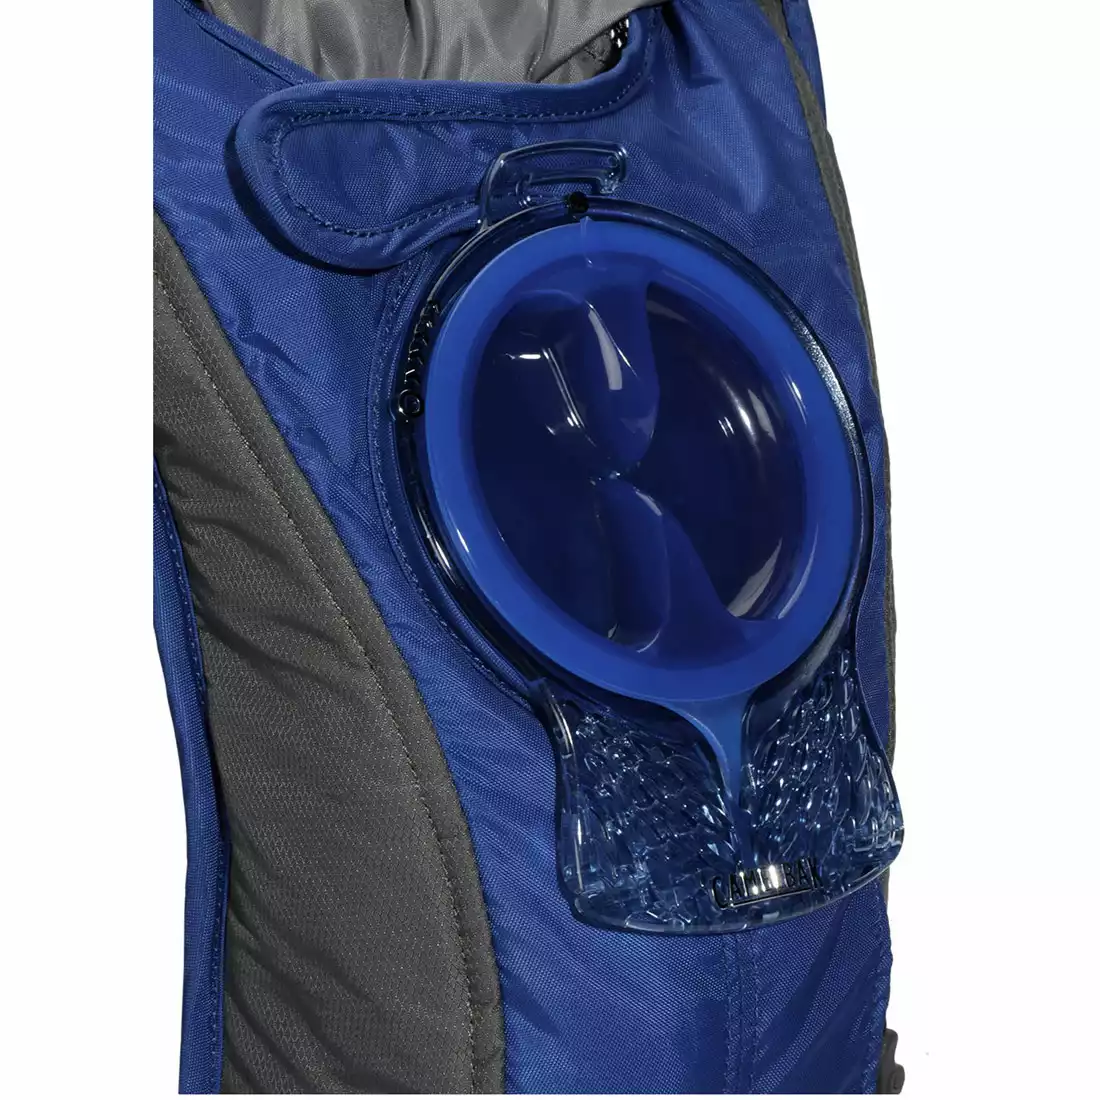 CAMELBAK plecak z bukłakiem HydroBak 50 oz / 1.5 L Pure Blue/Graphite INTL 62203-IN SS16